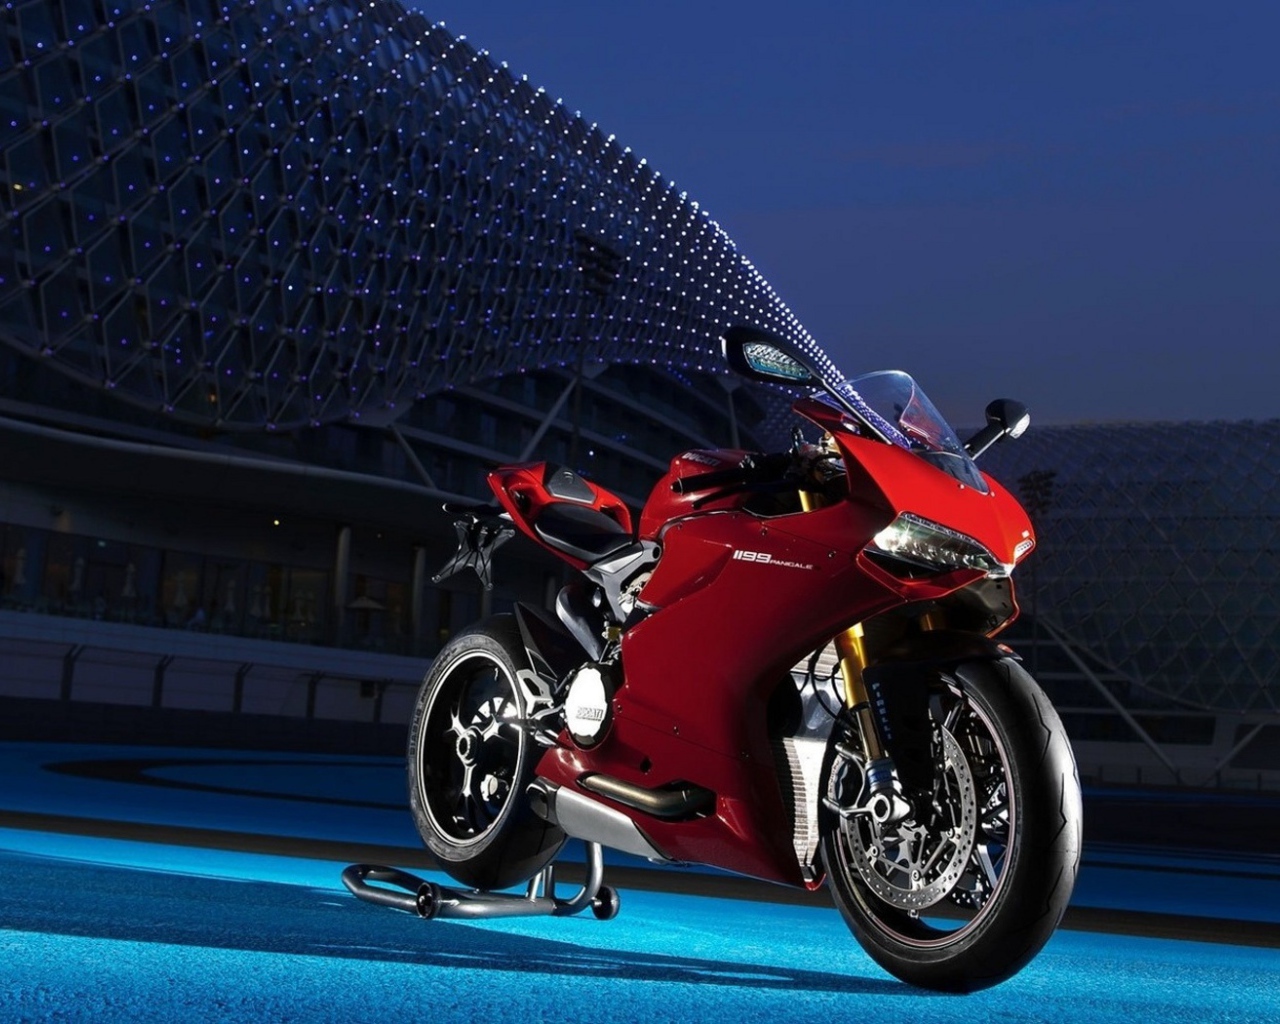 Красный мотоцикл Ducatti